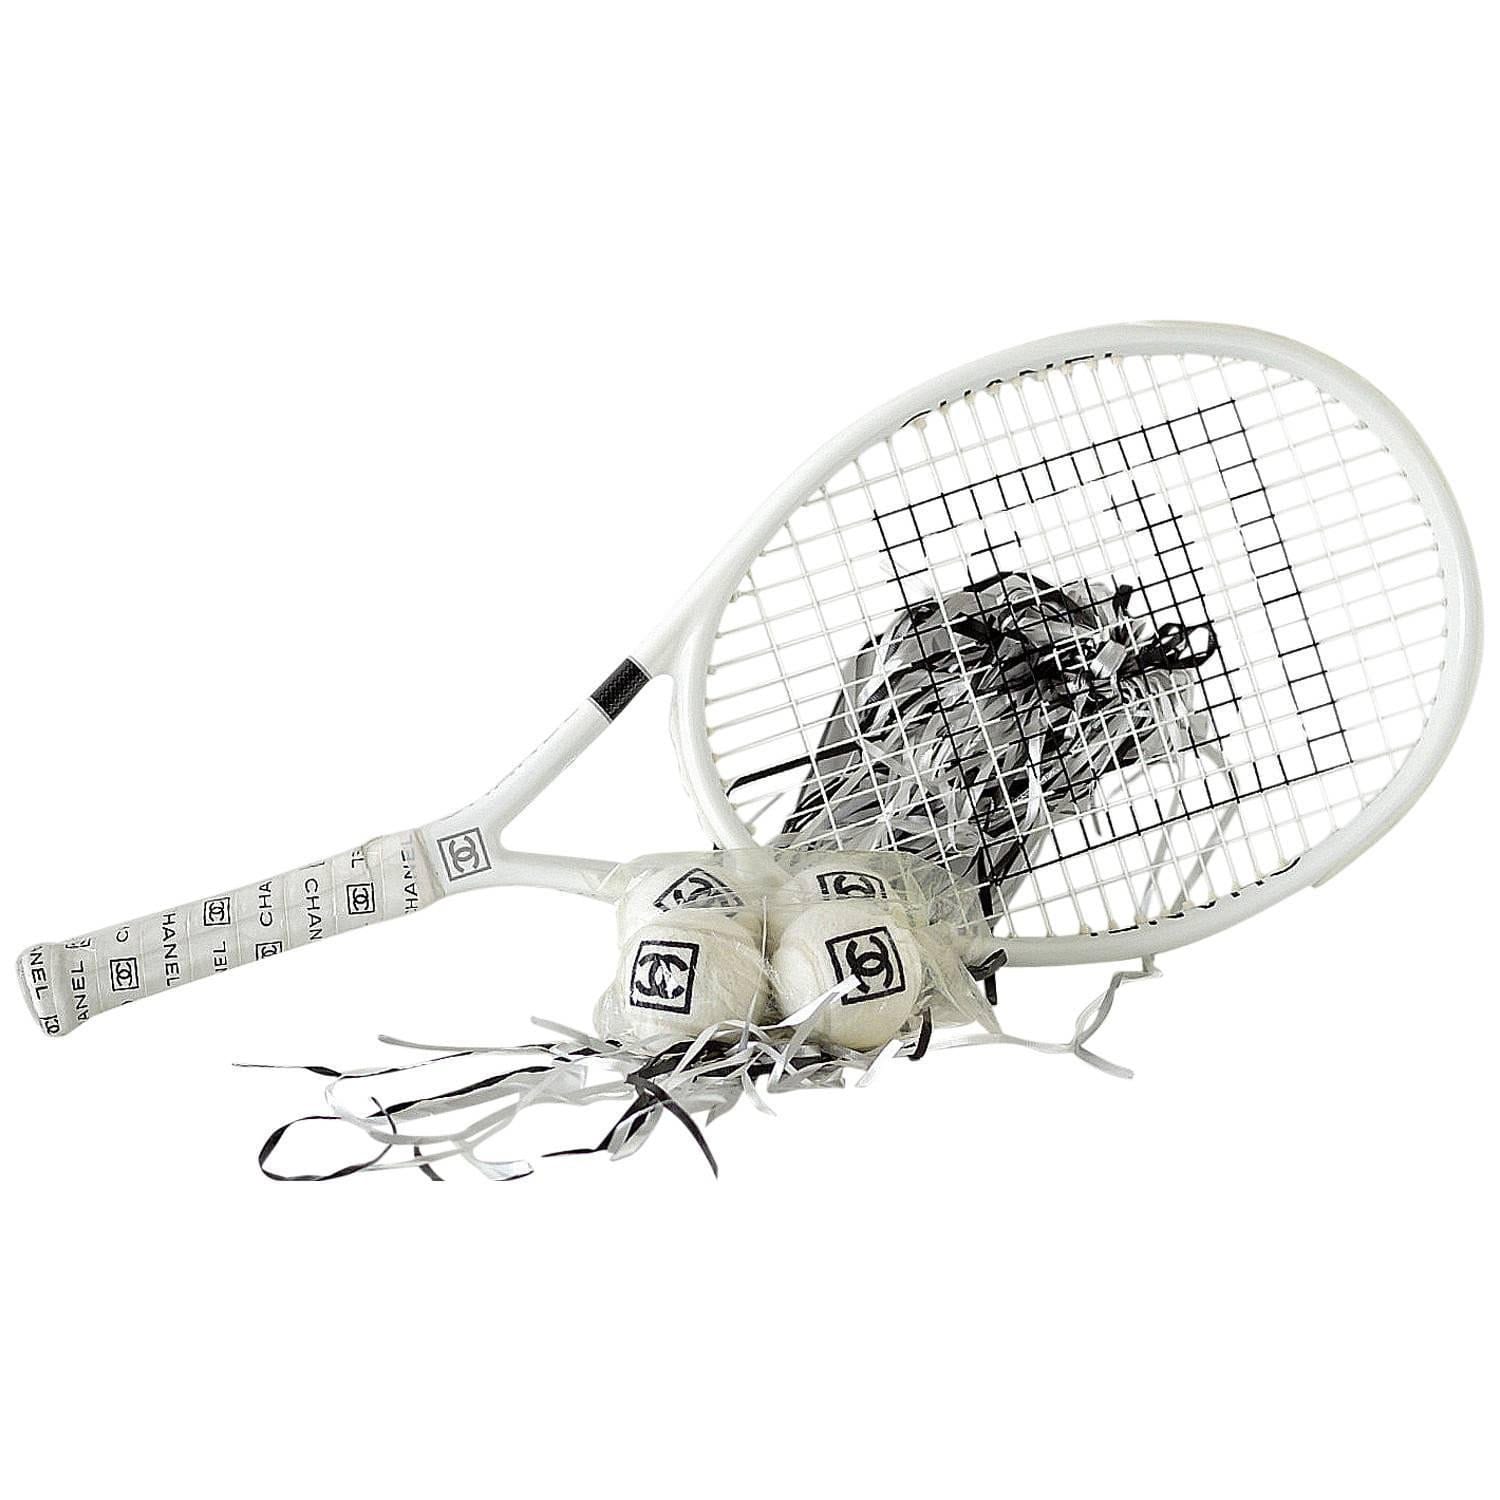 Chanel by Karl Lagerfeld Tennis Racket Set